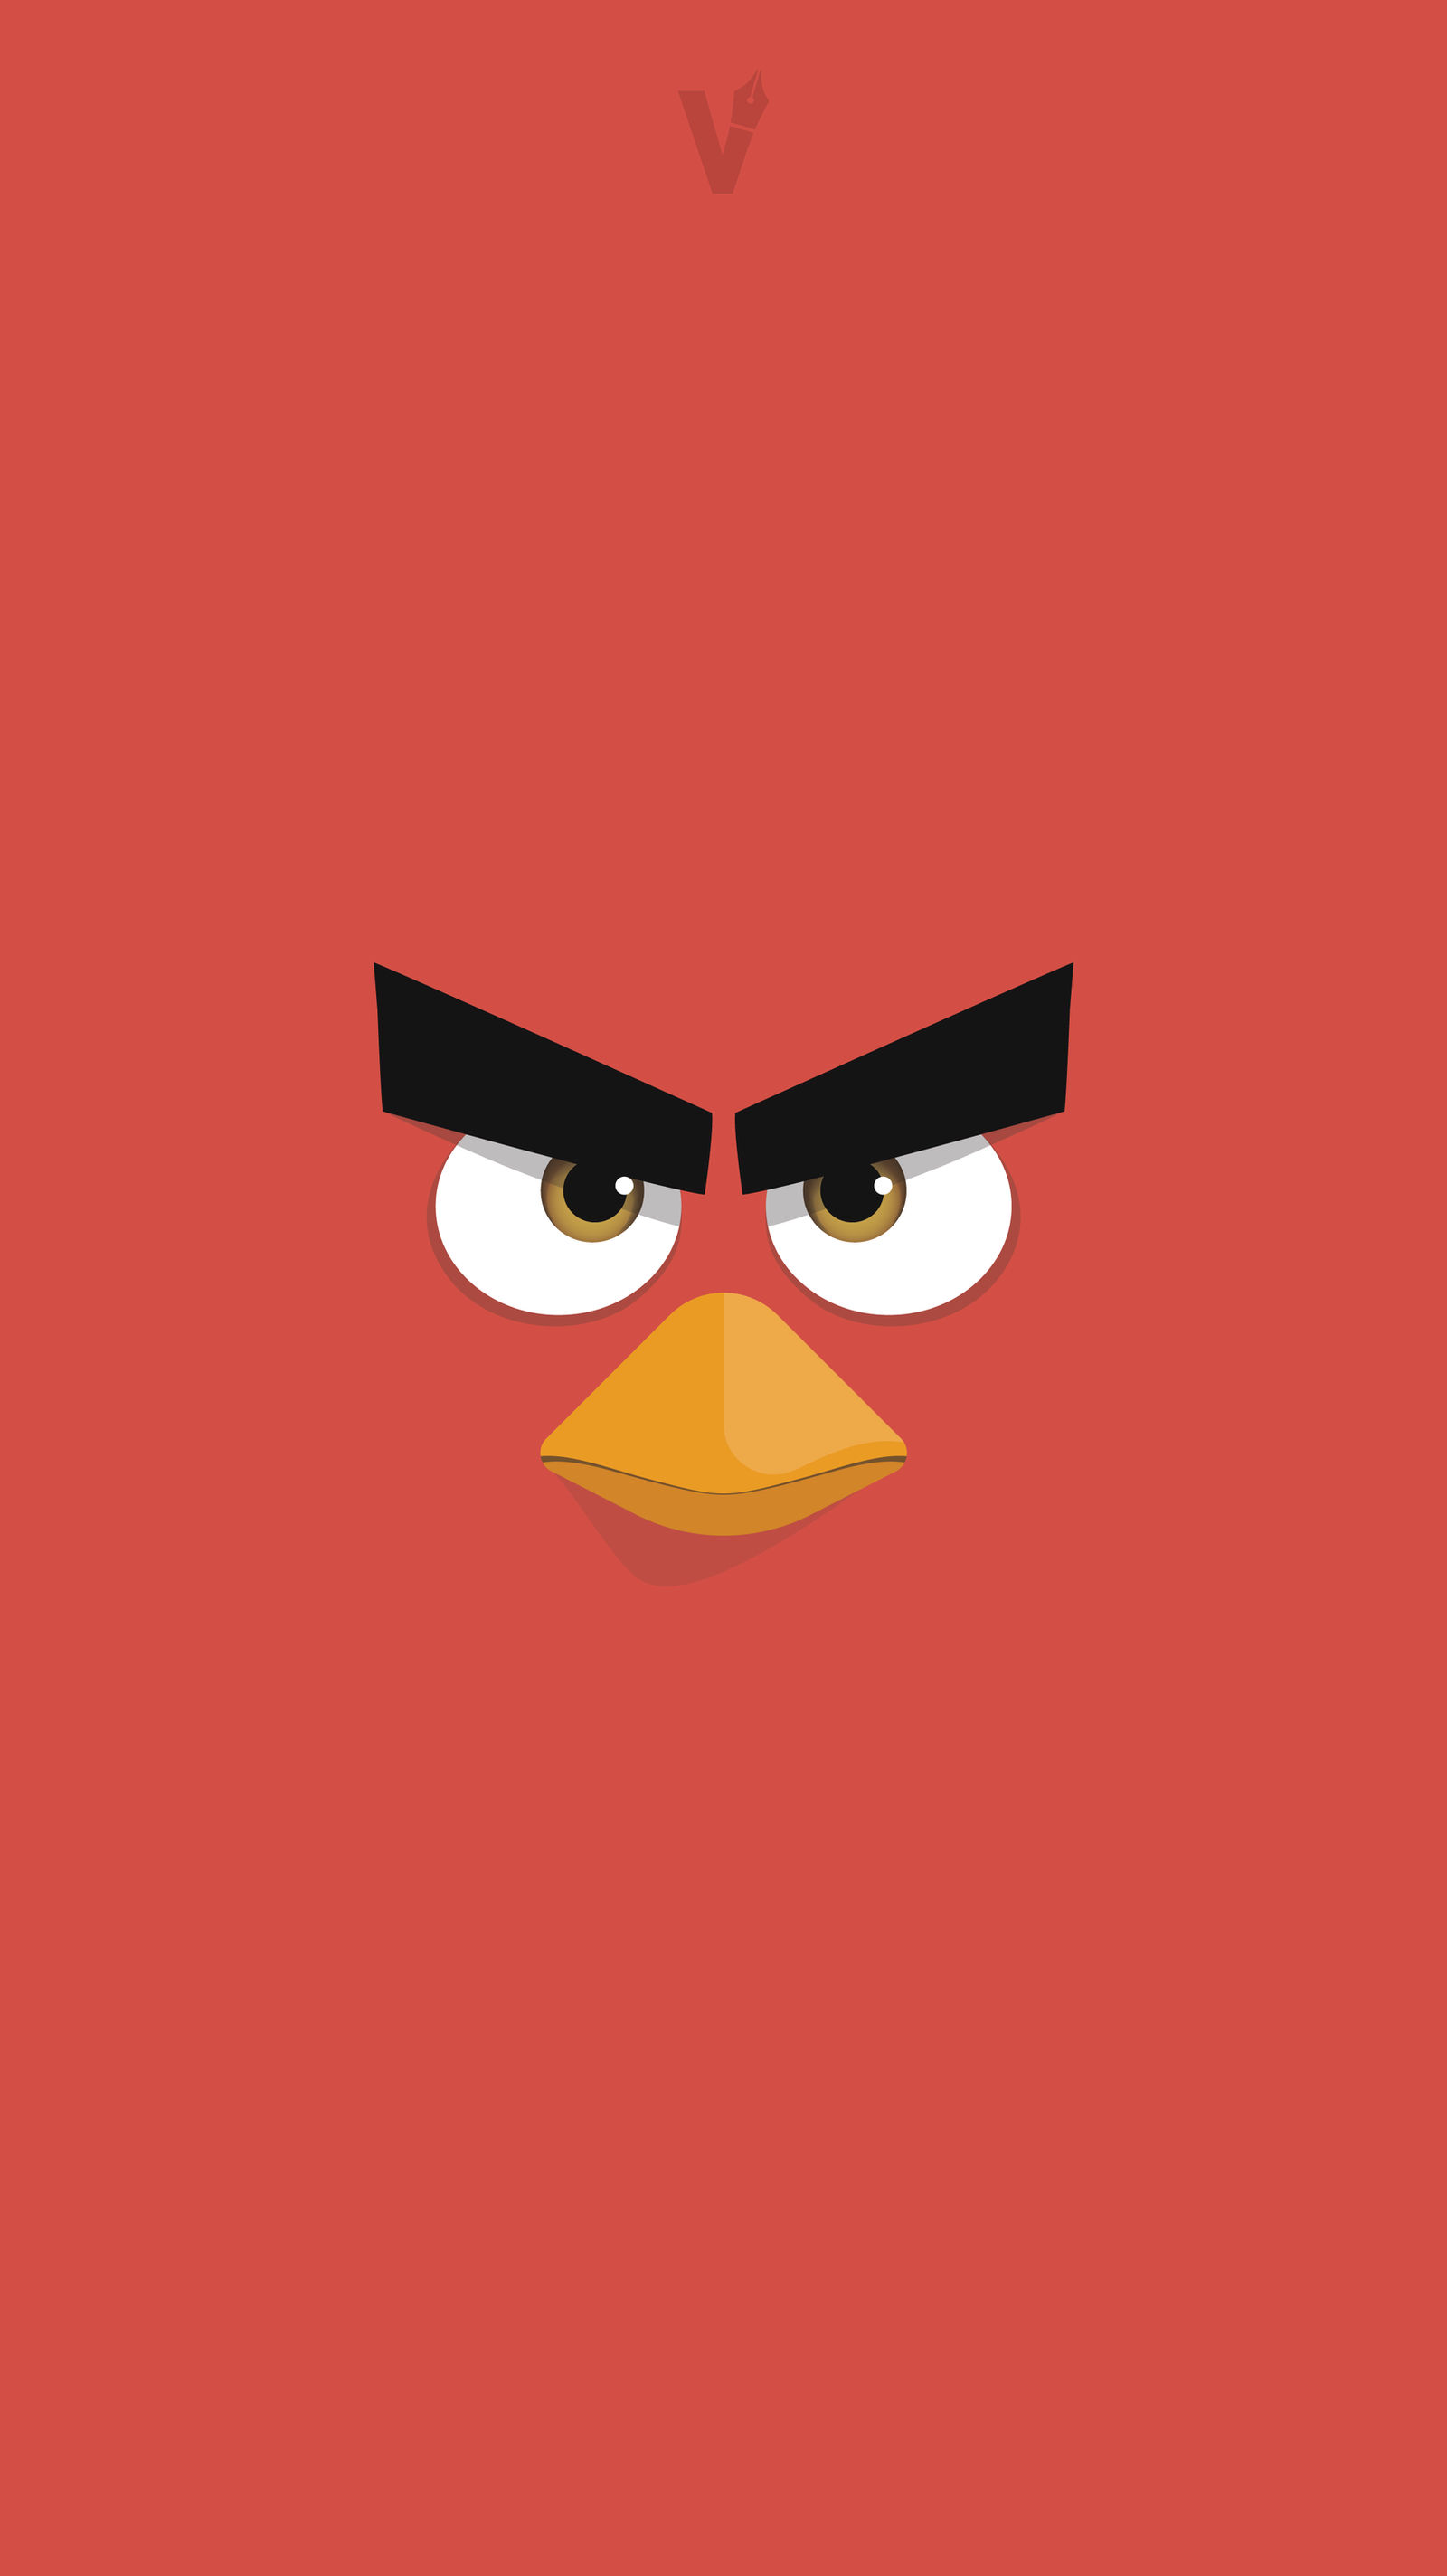 Red - Angry Birds Flat Wallpaper/Lockscreen. by armaghanbashir on DeviantArt